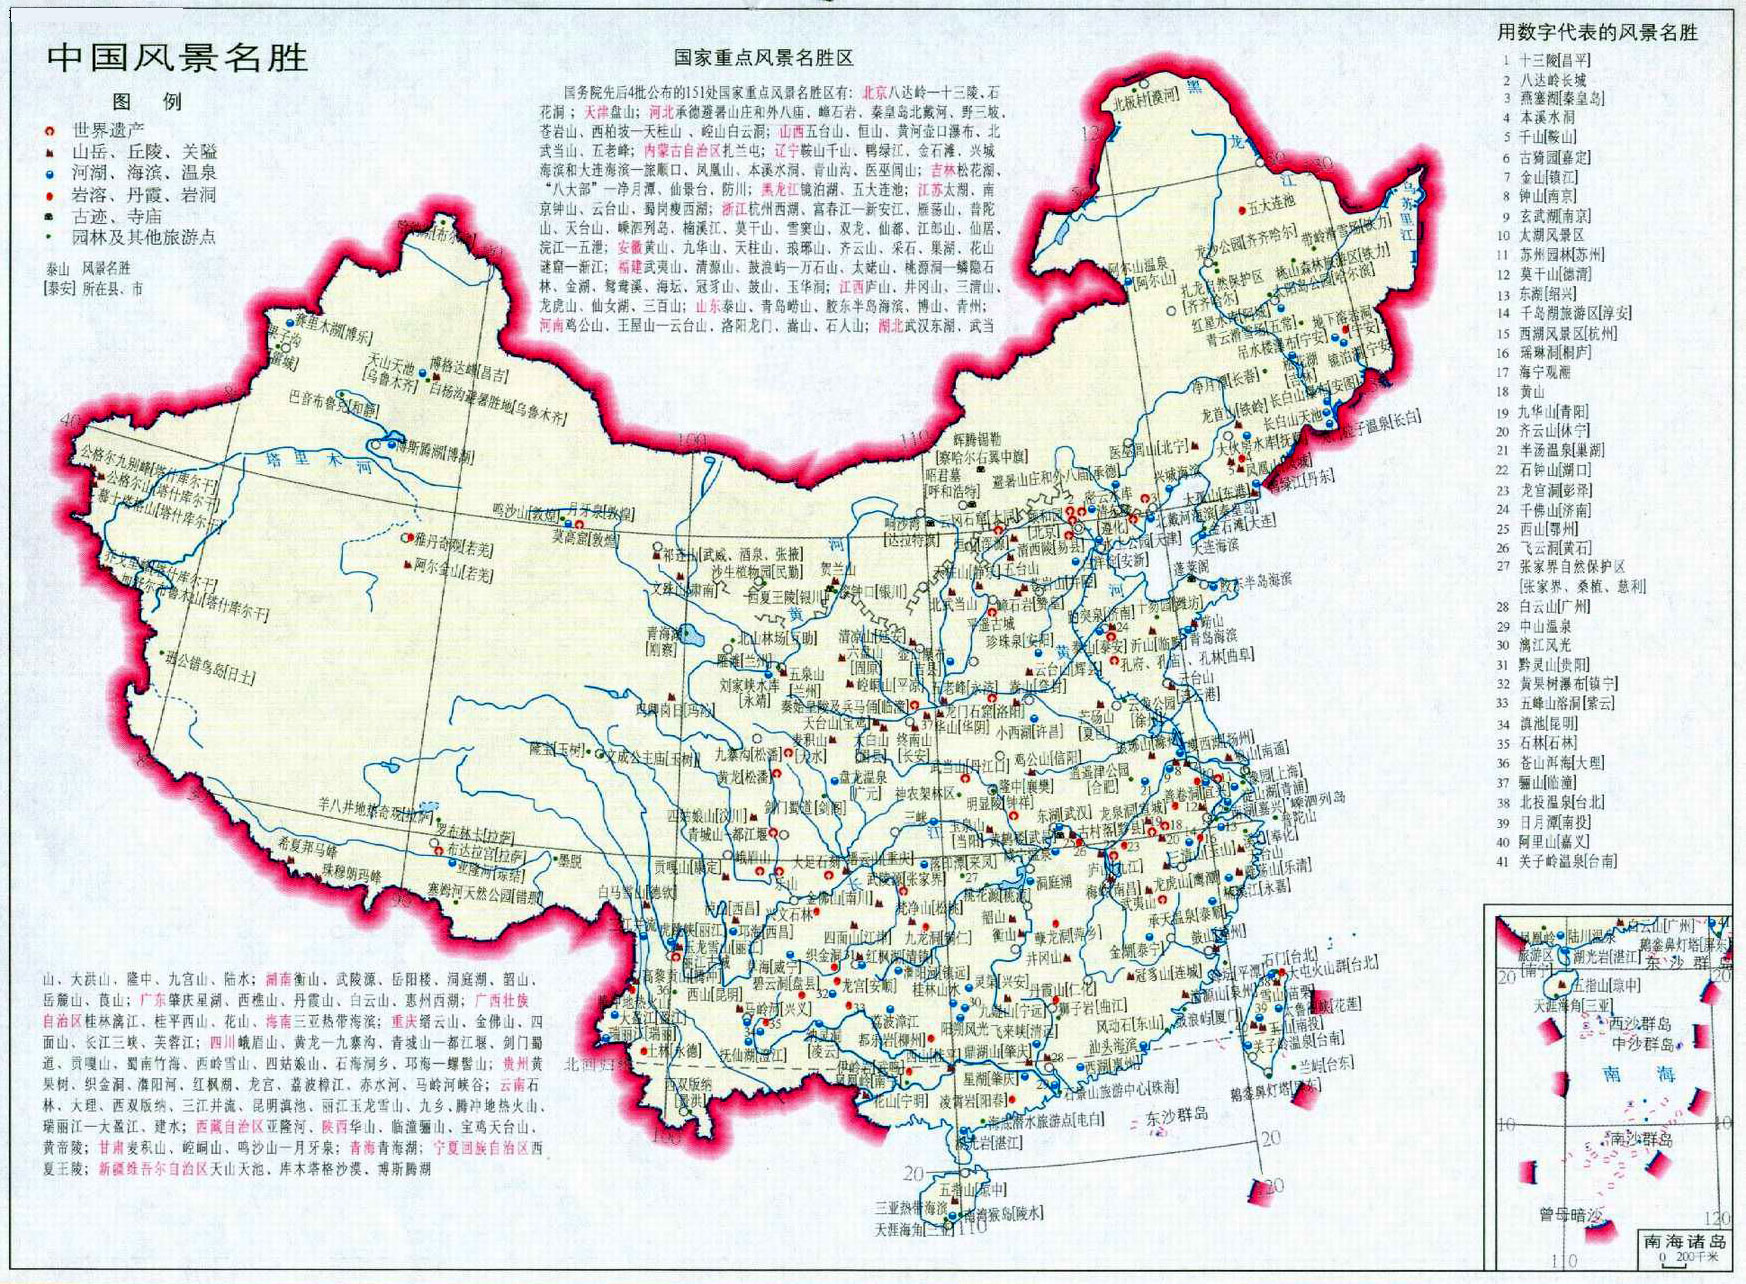 China tourist map - Tourist map China (Eastern Asia - Asia)